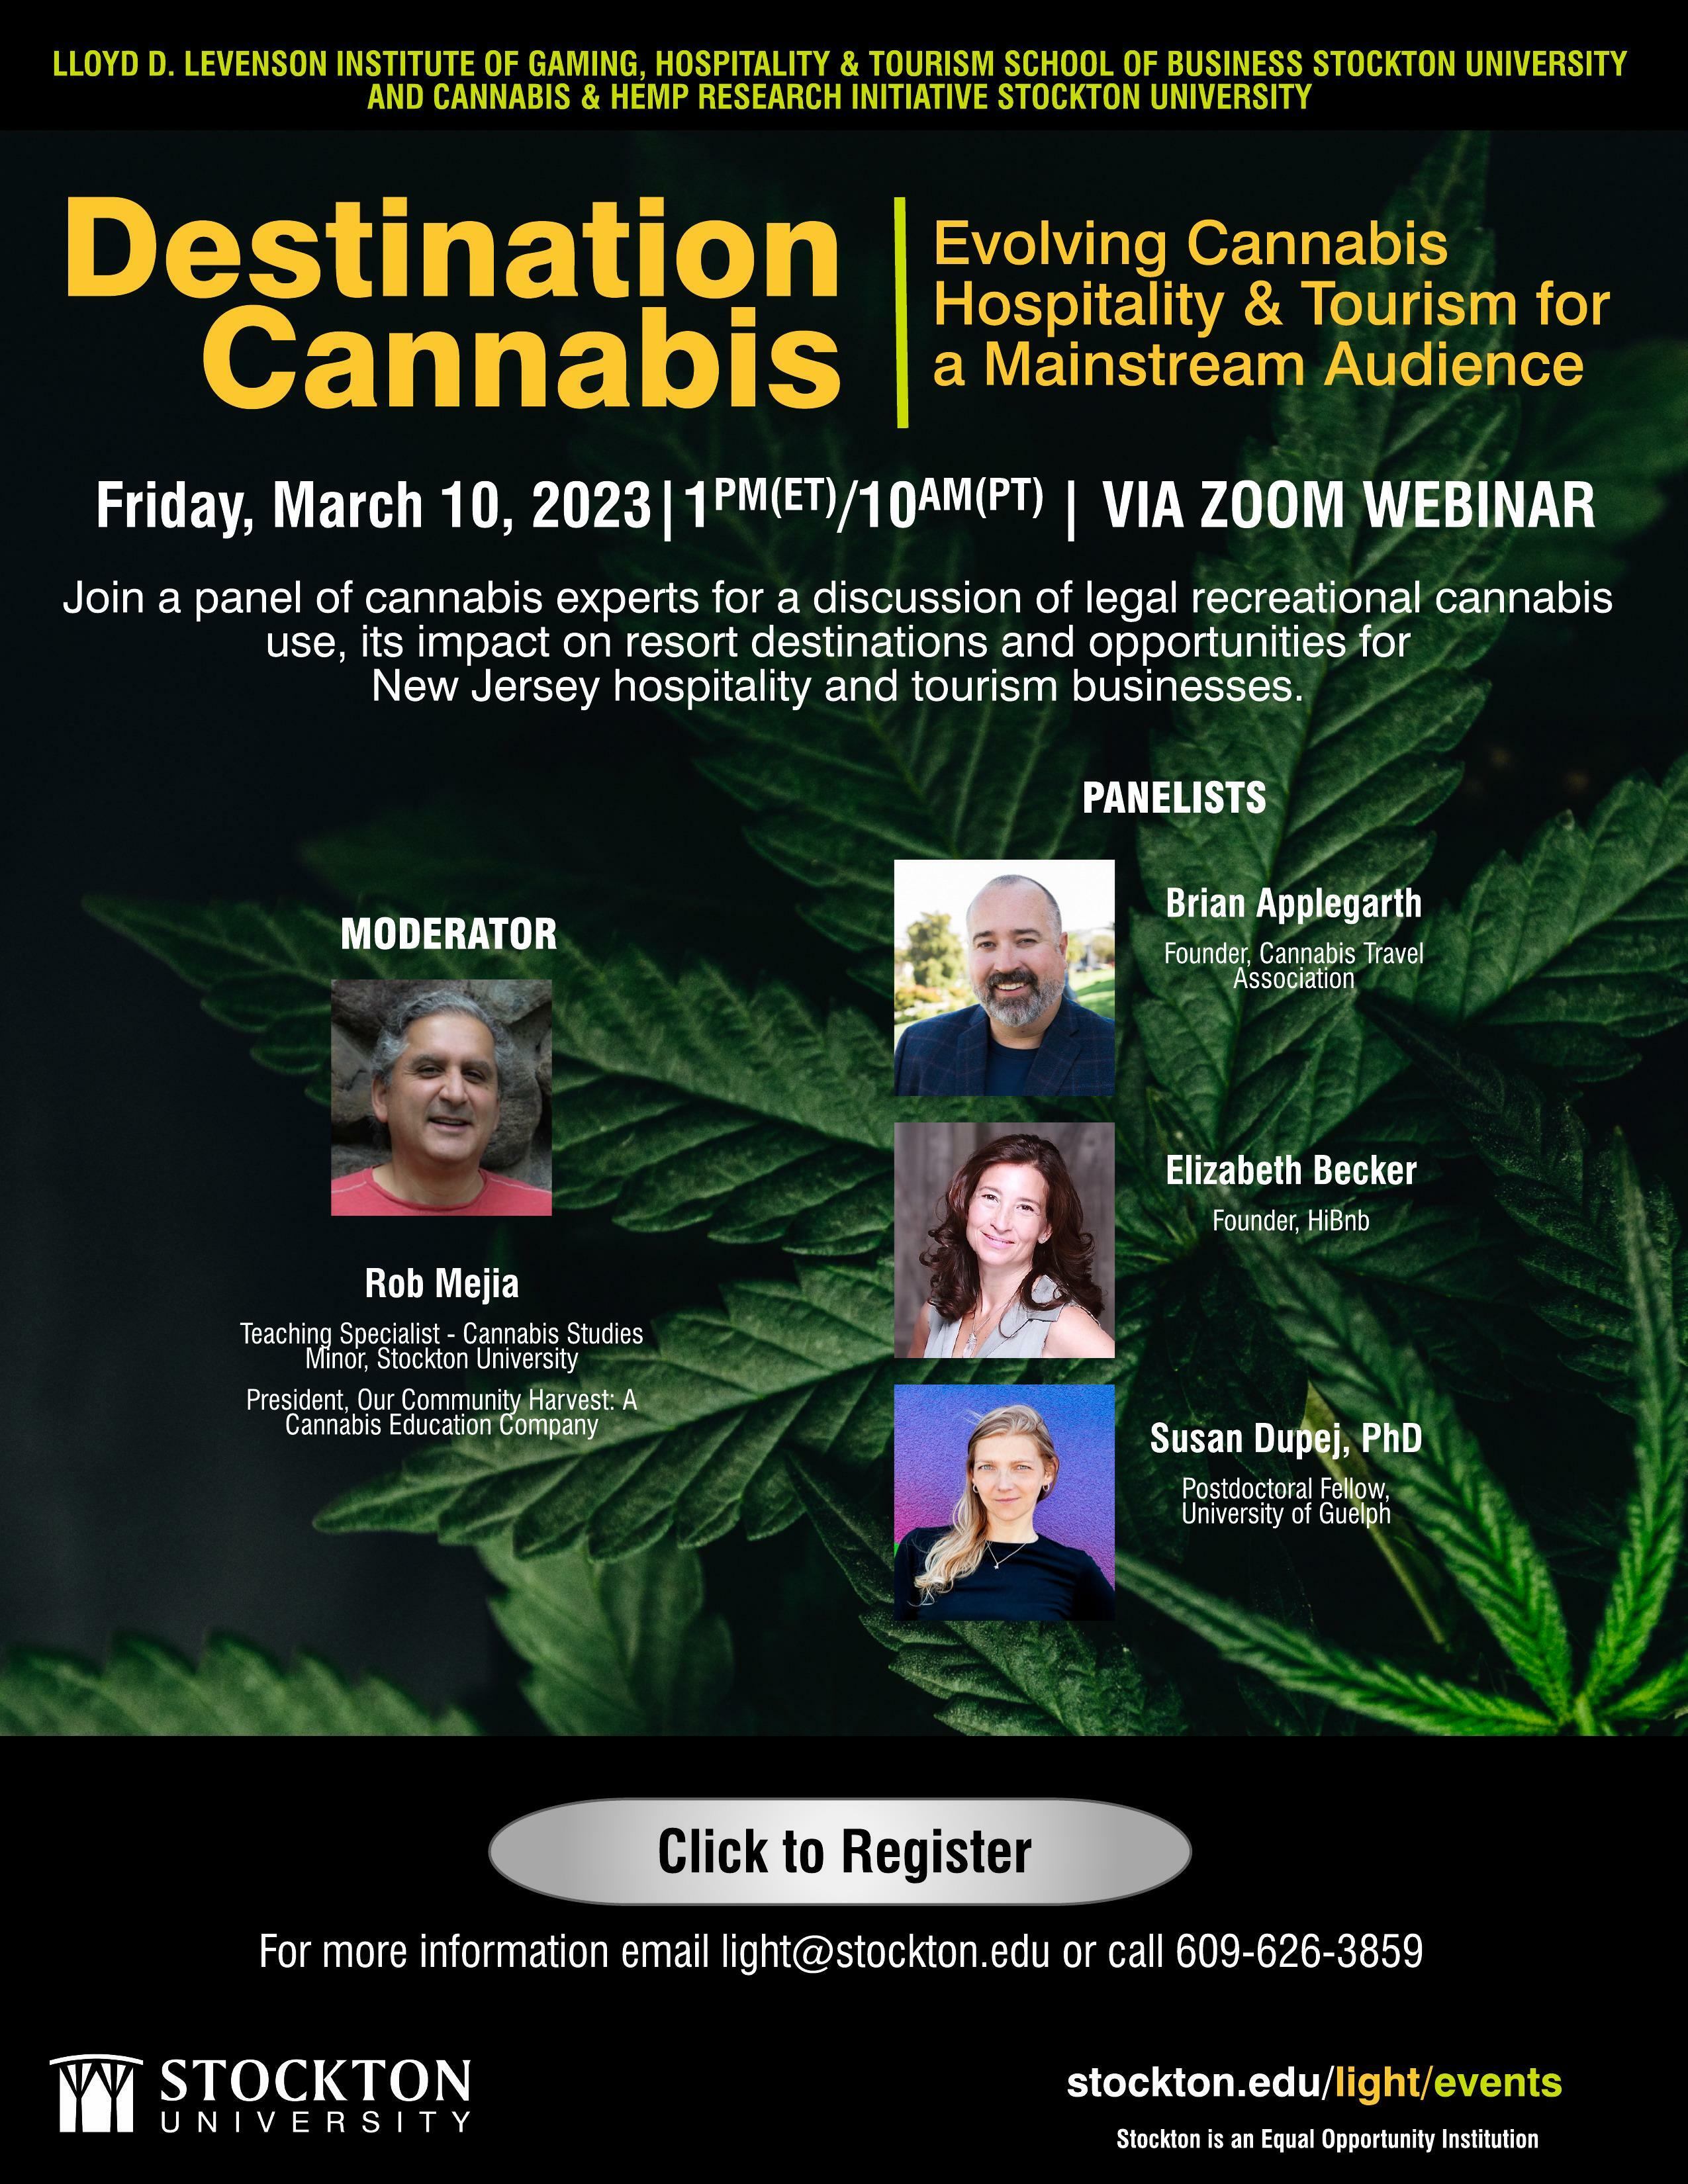 Destination Cannabis Evite